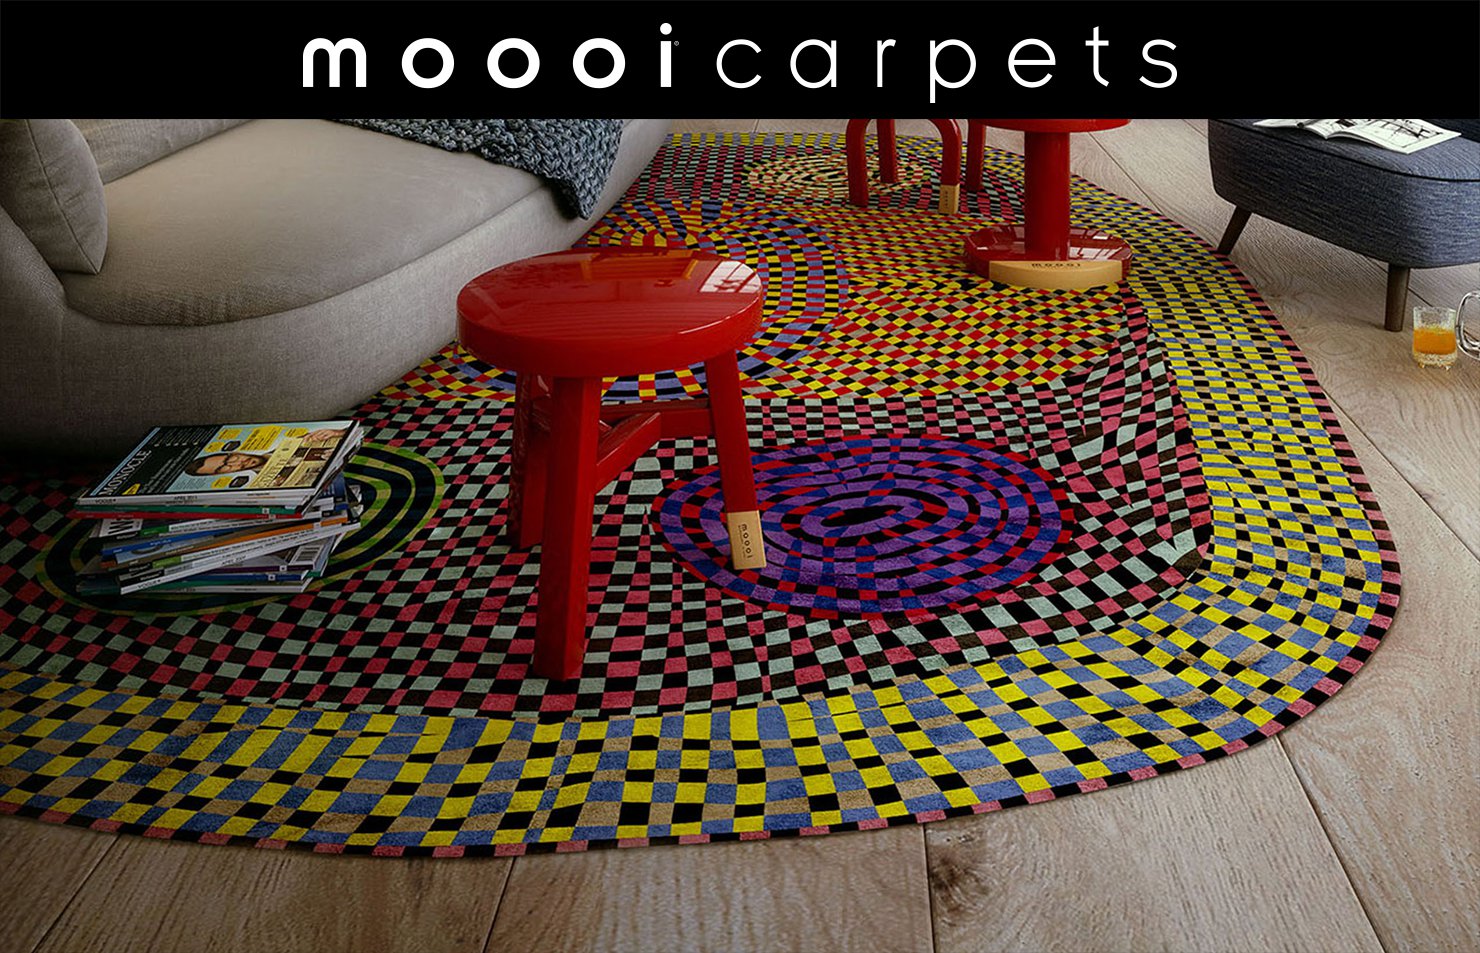 moooi Carpets モーイカーペット